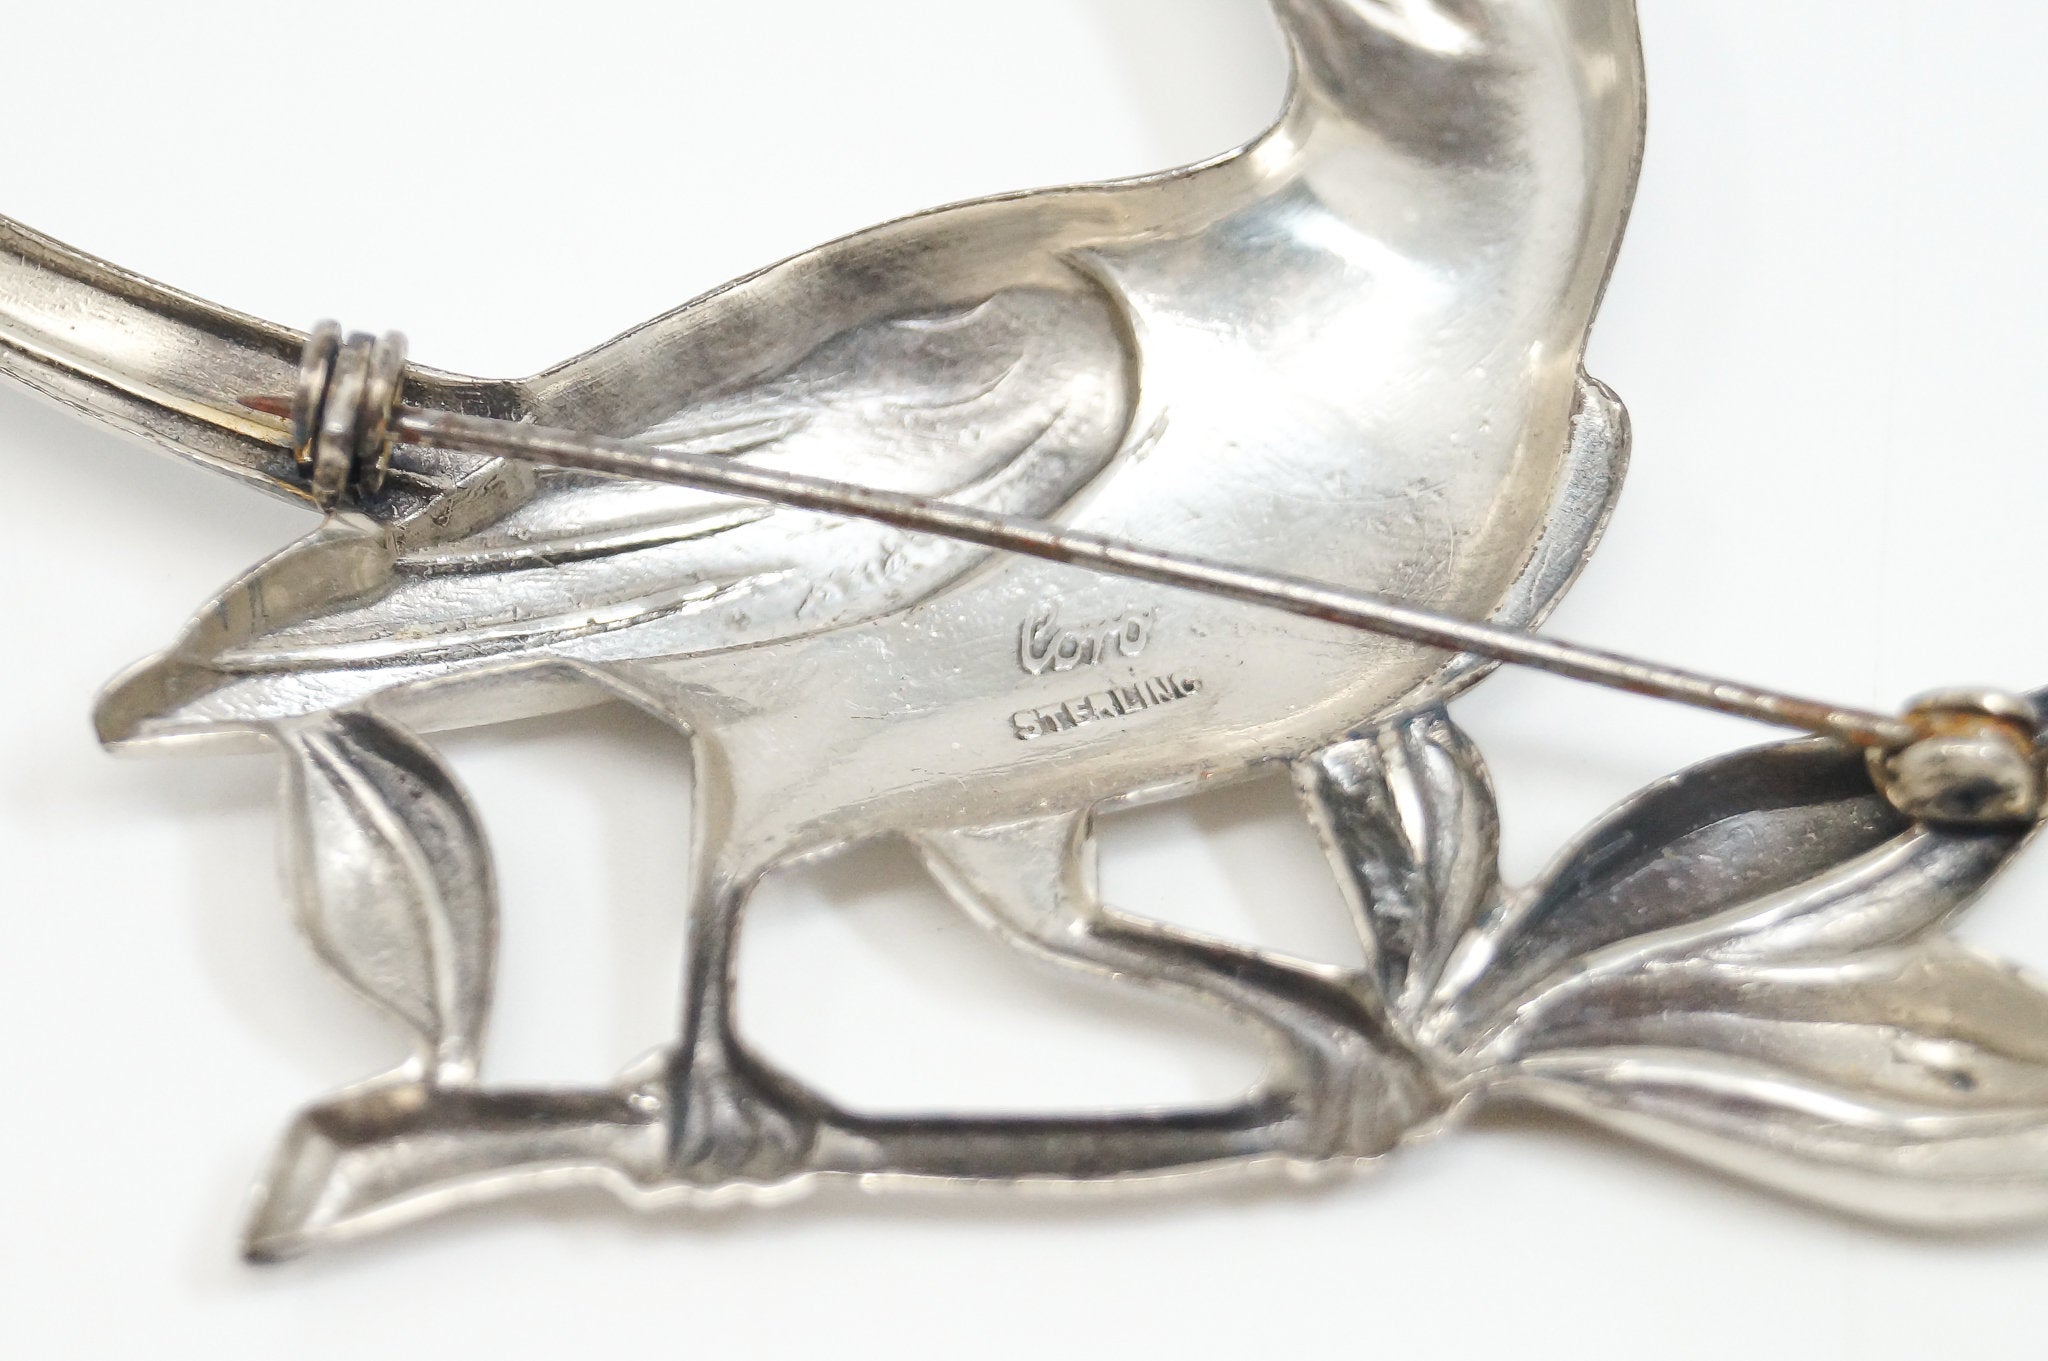 Rare Vintage Coro Bird On Branch Sterling Silver Pin Brooch